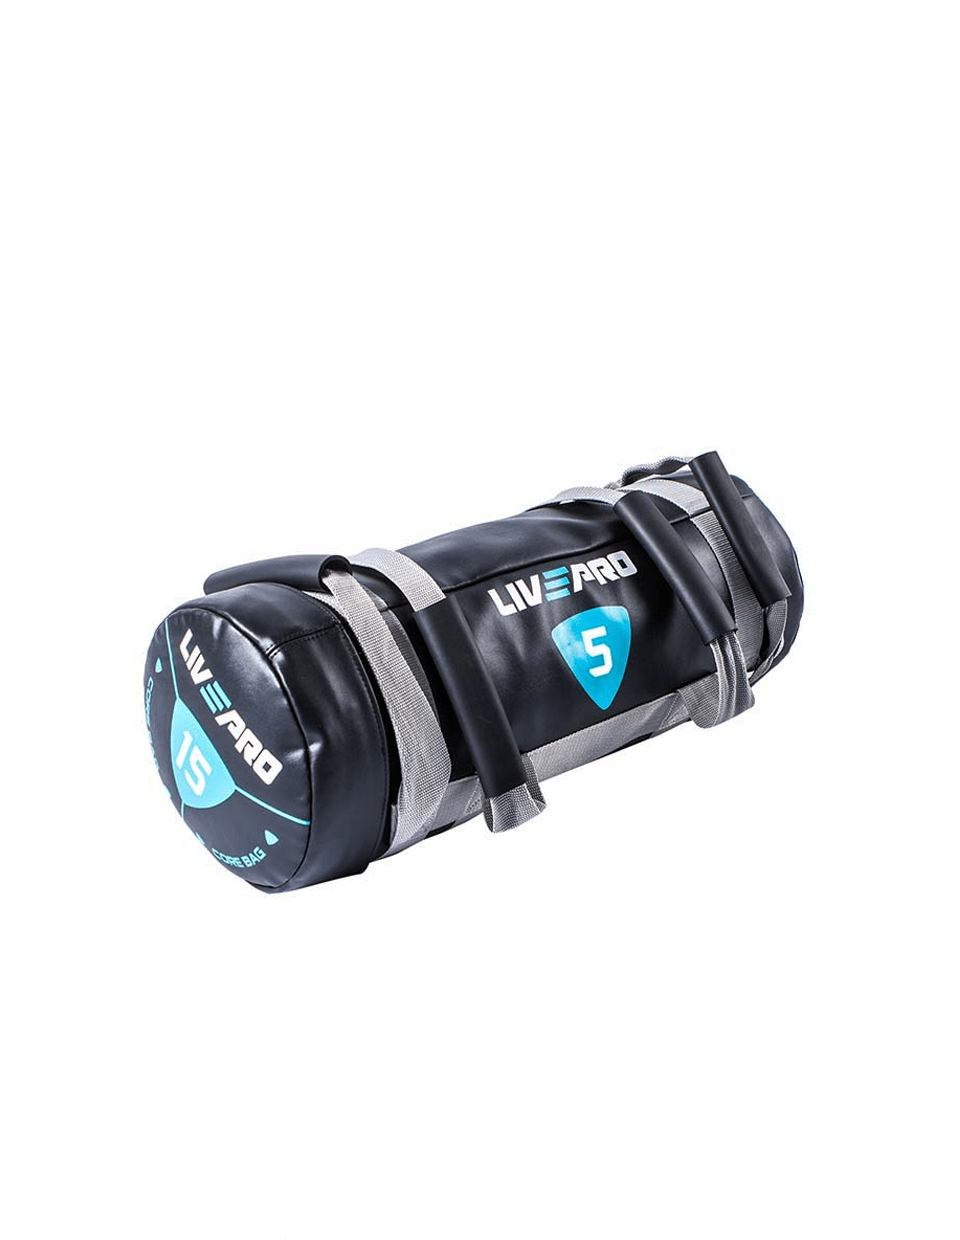 LivePro Power Bag 5 KG to 25 KG - Athletix.ae